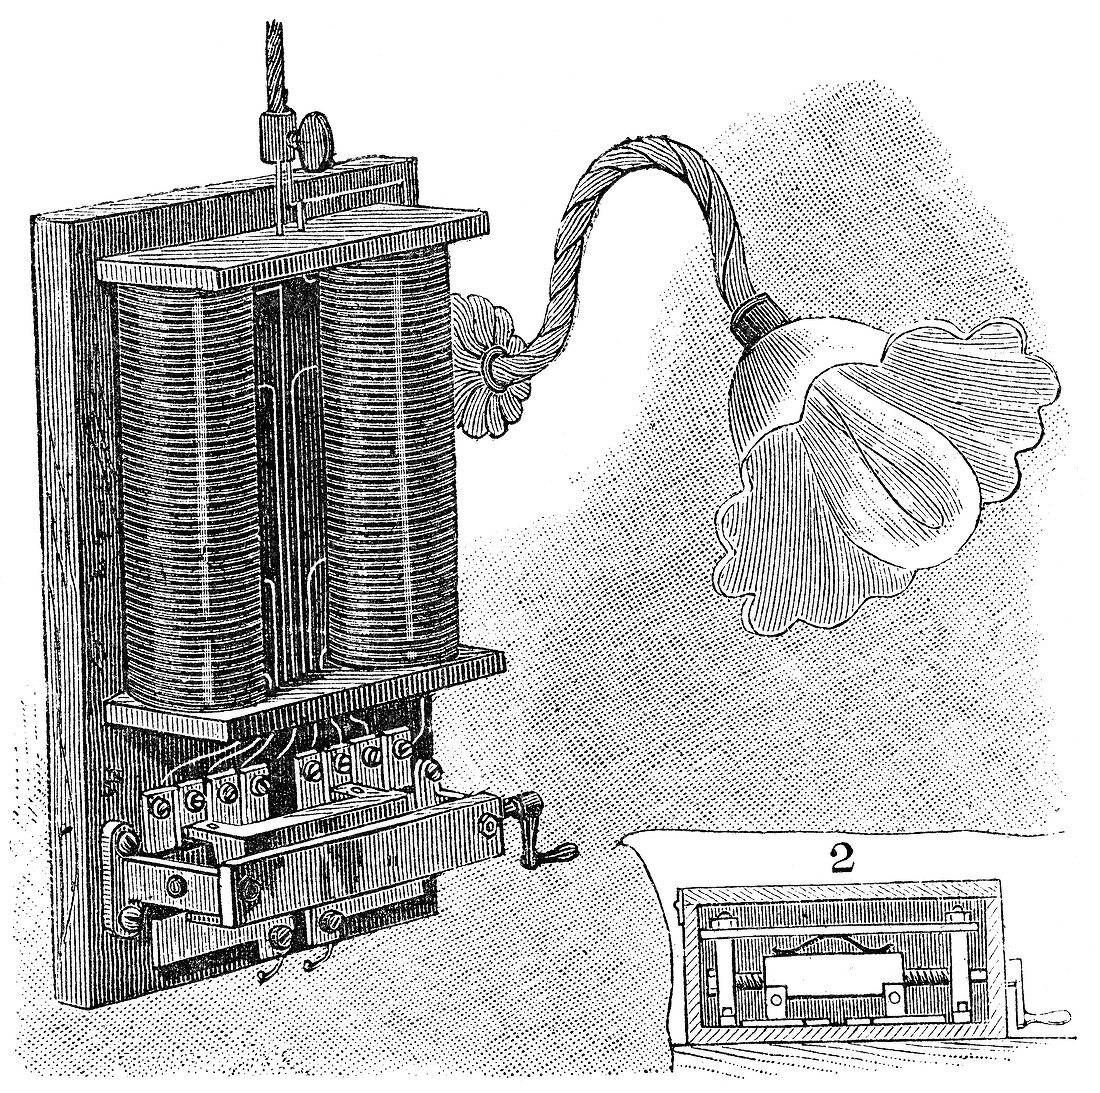 Dimmer lamp electrics,19th century